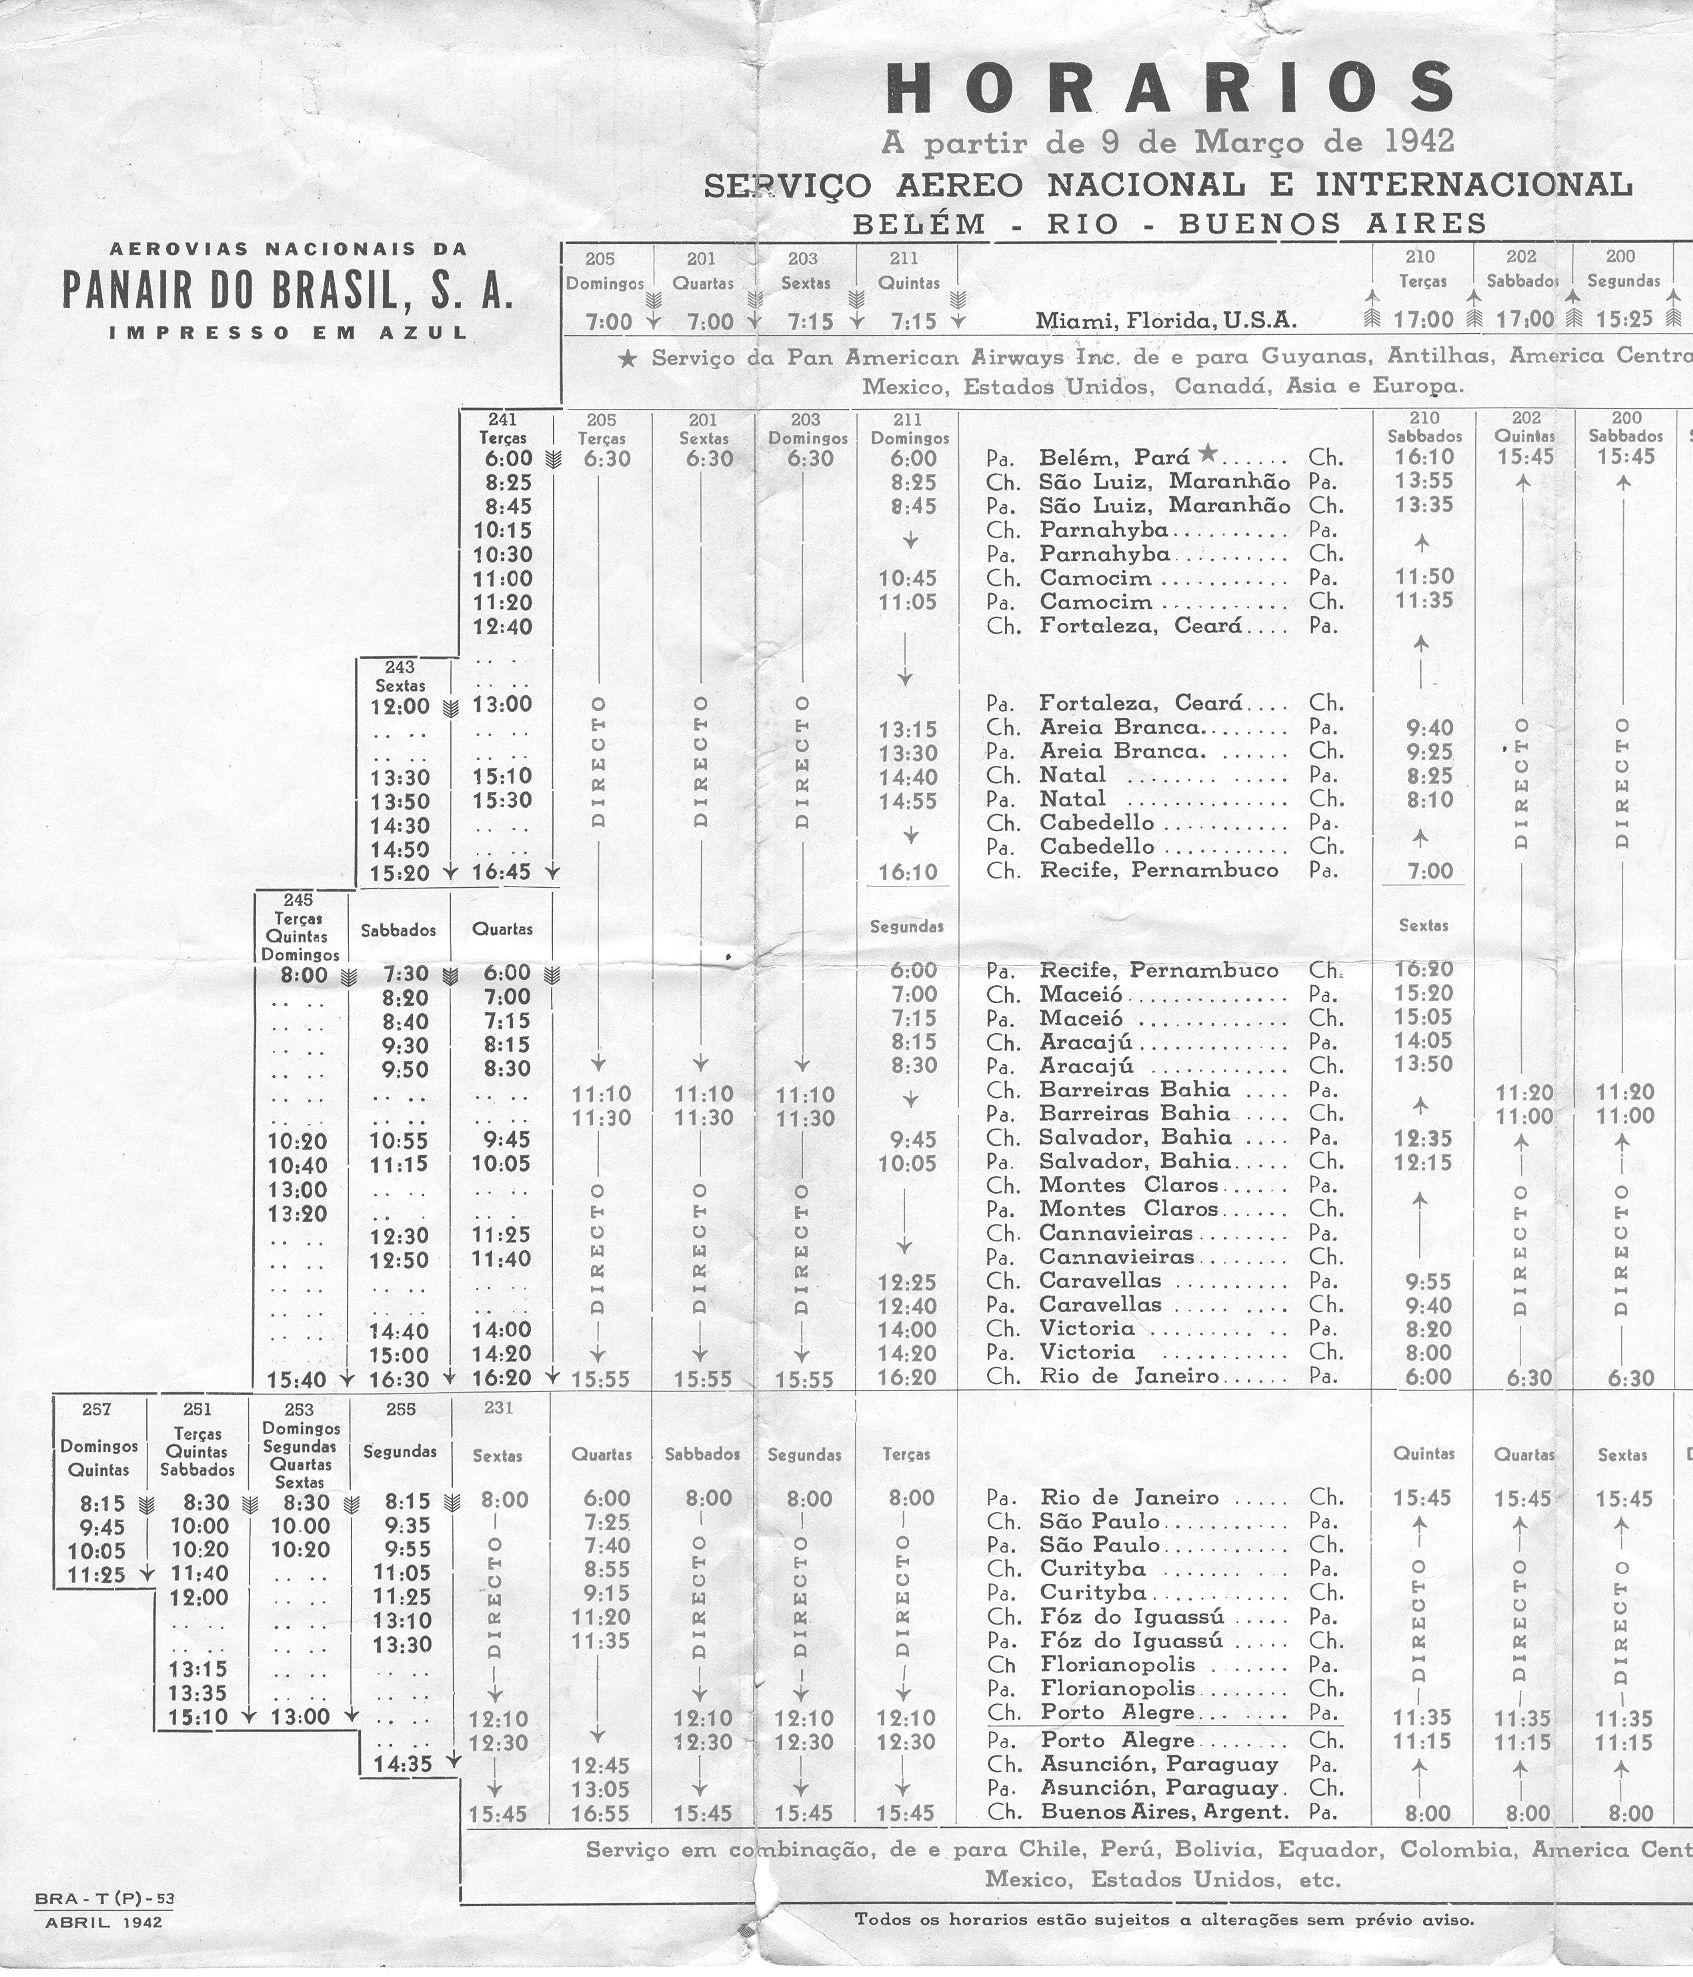 1942, March 9, Flight Schedule for Pan Am associated company Pan Air Do Brasil